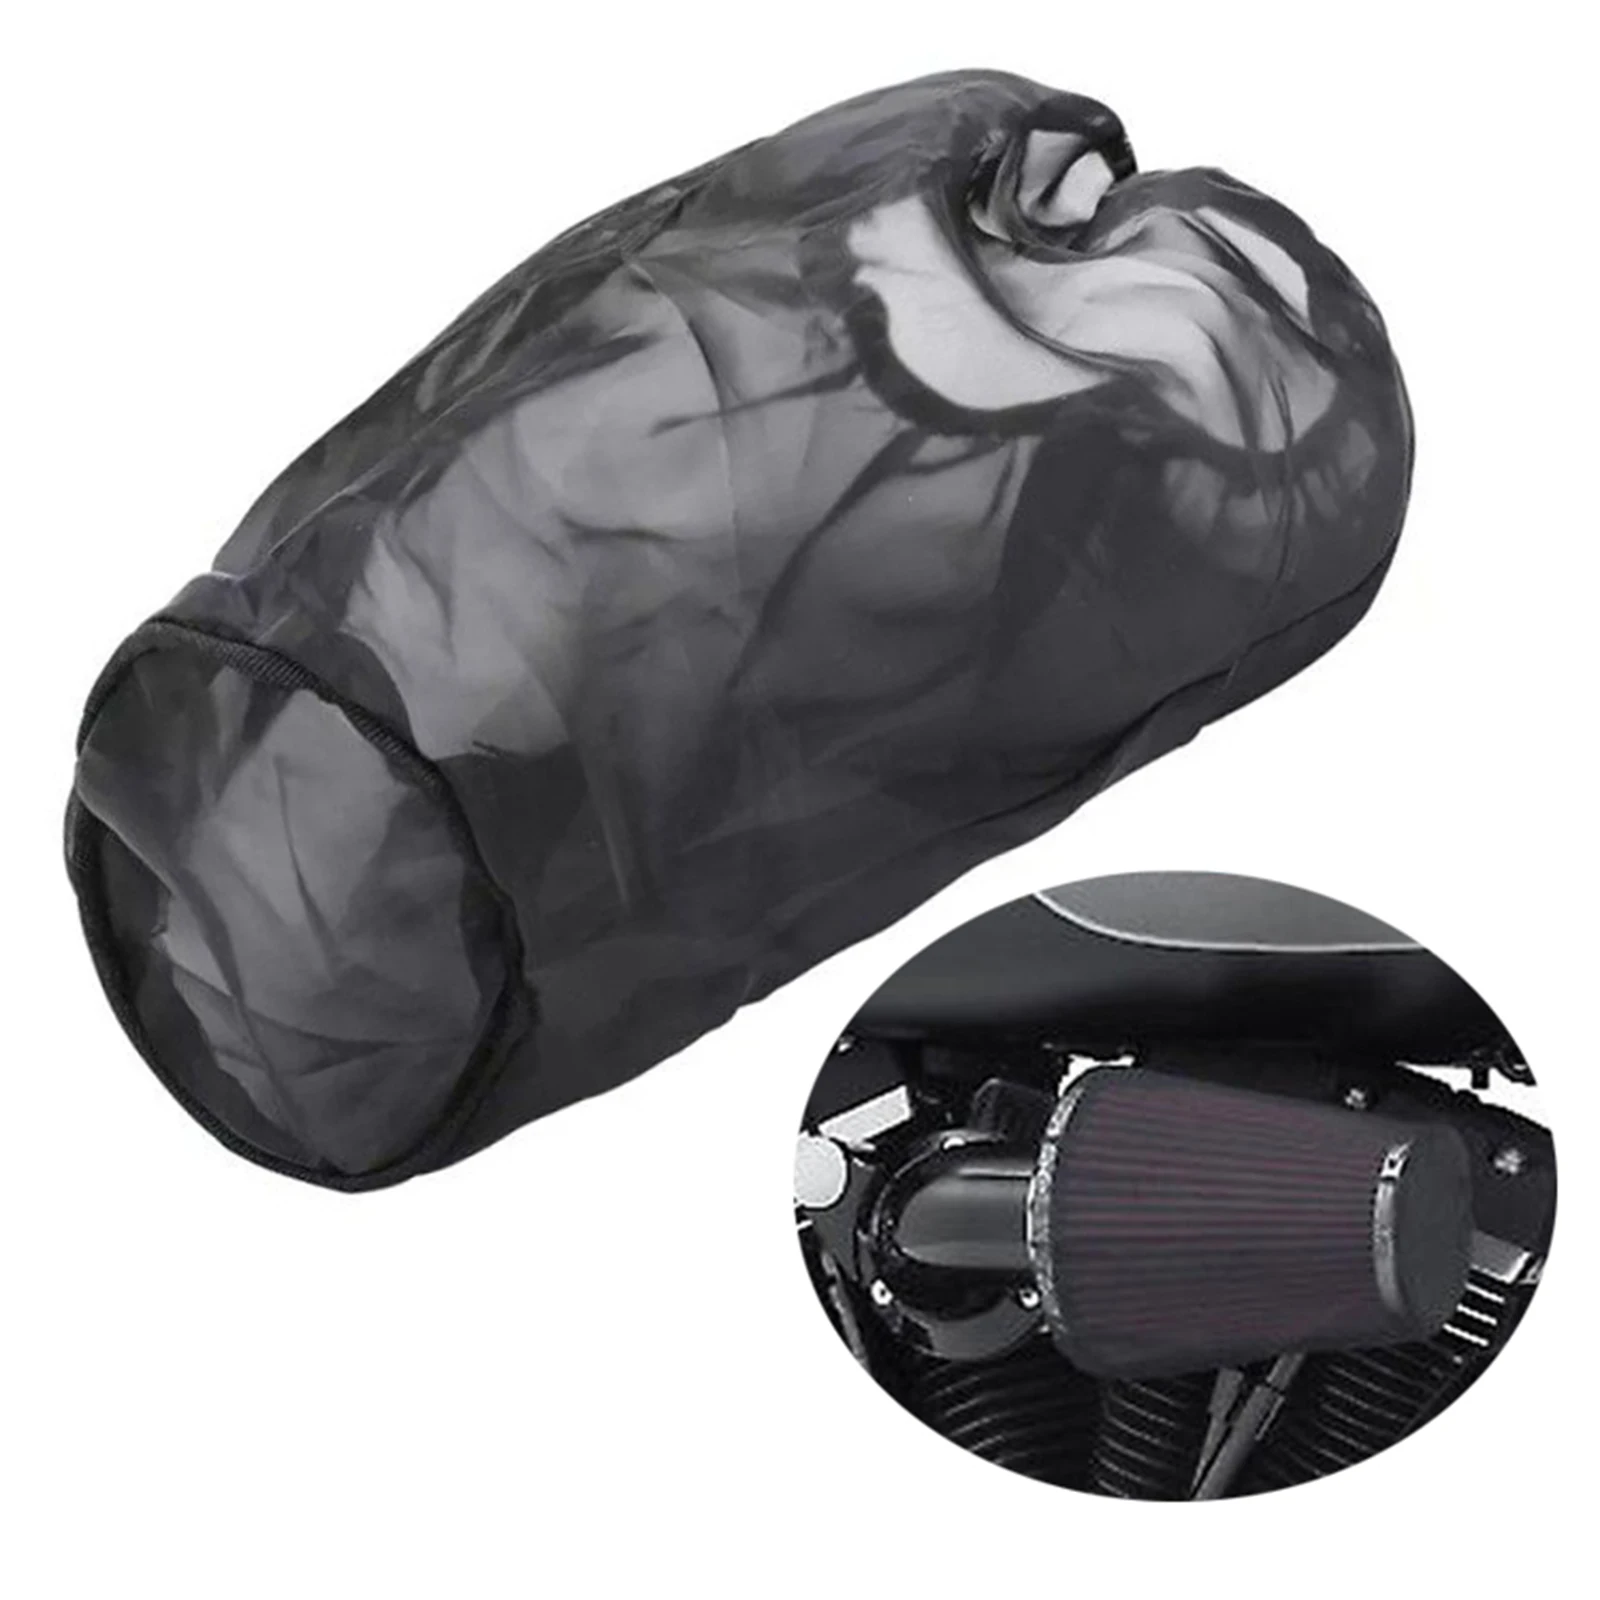 Motorcycle Dustproof Air Filter Rain Sock Cover for Harley Easy Install